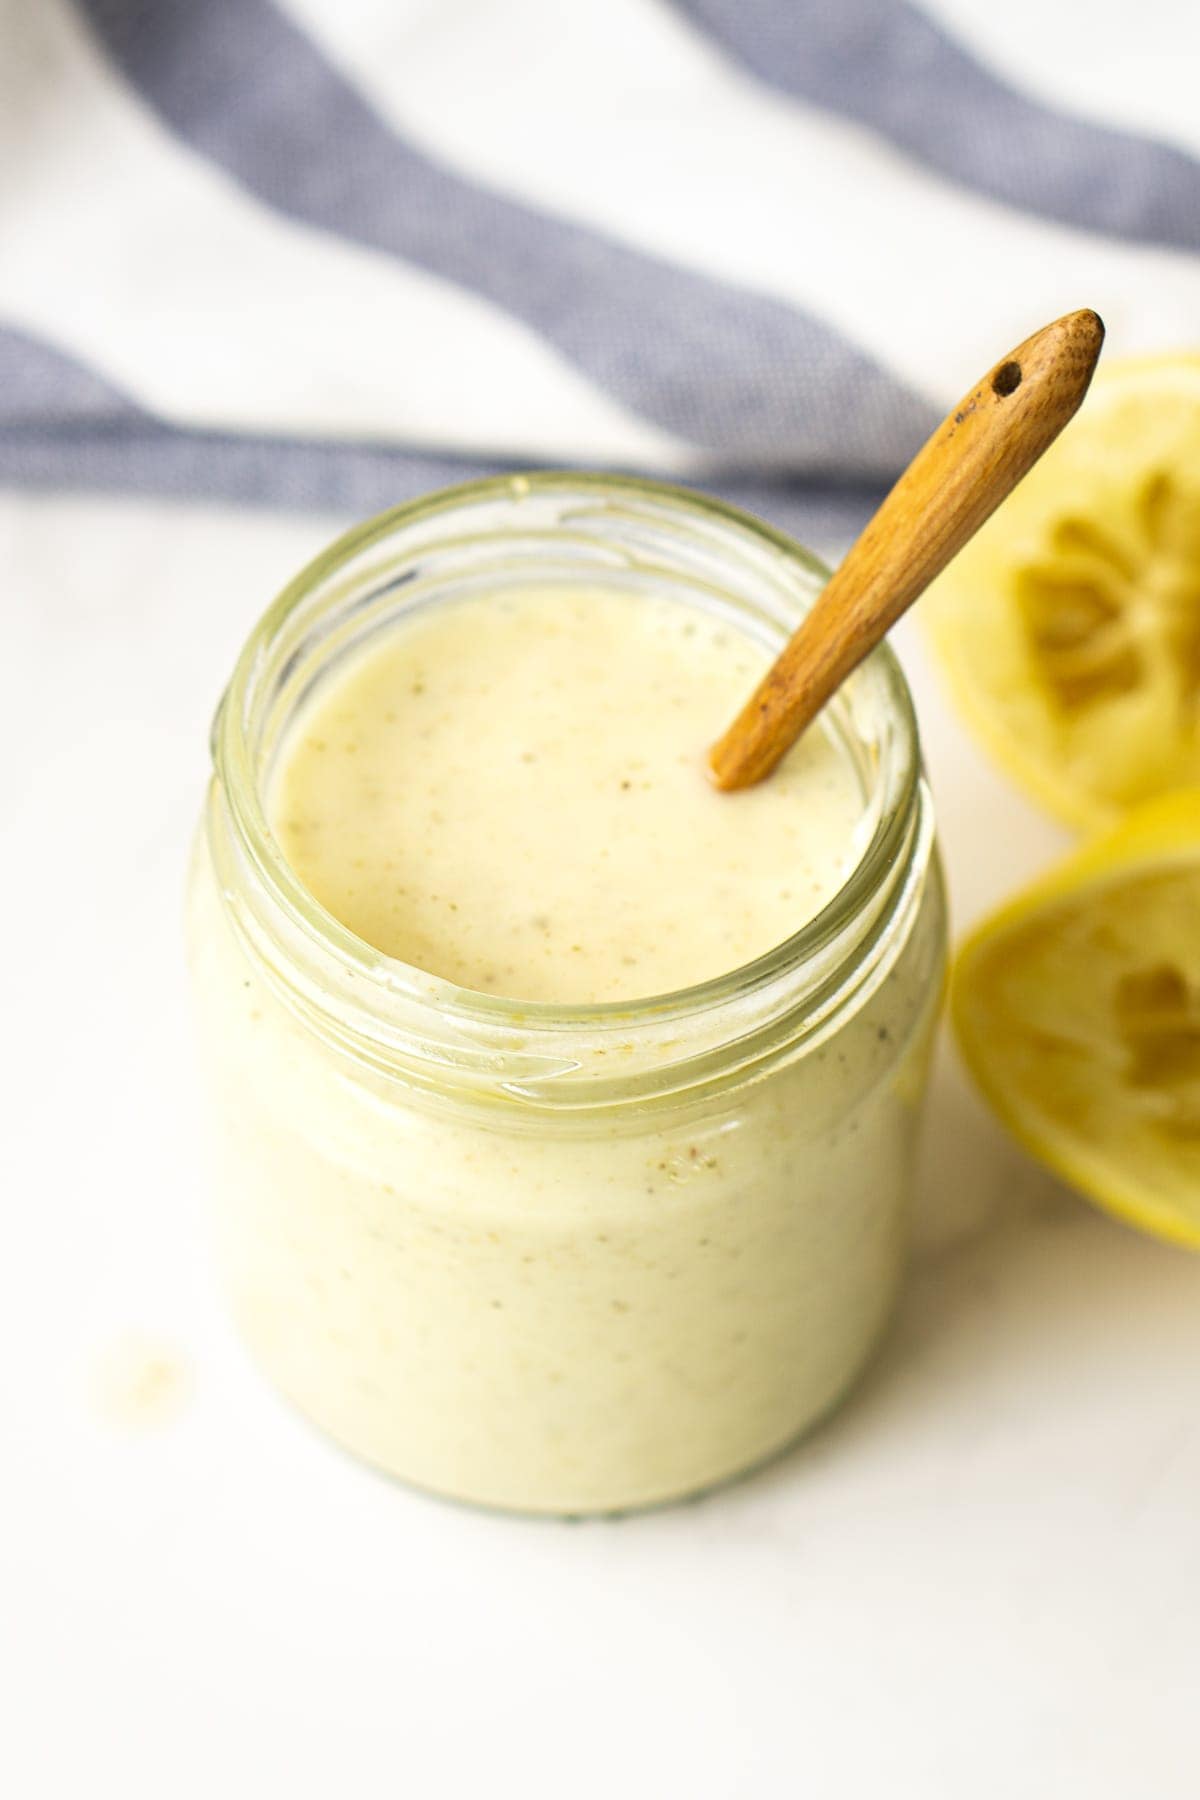 Lemon Garlic Sauce in a Jar with a Spoon